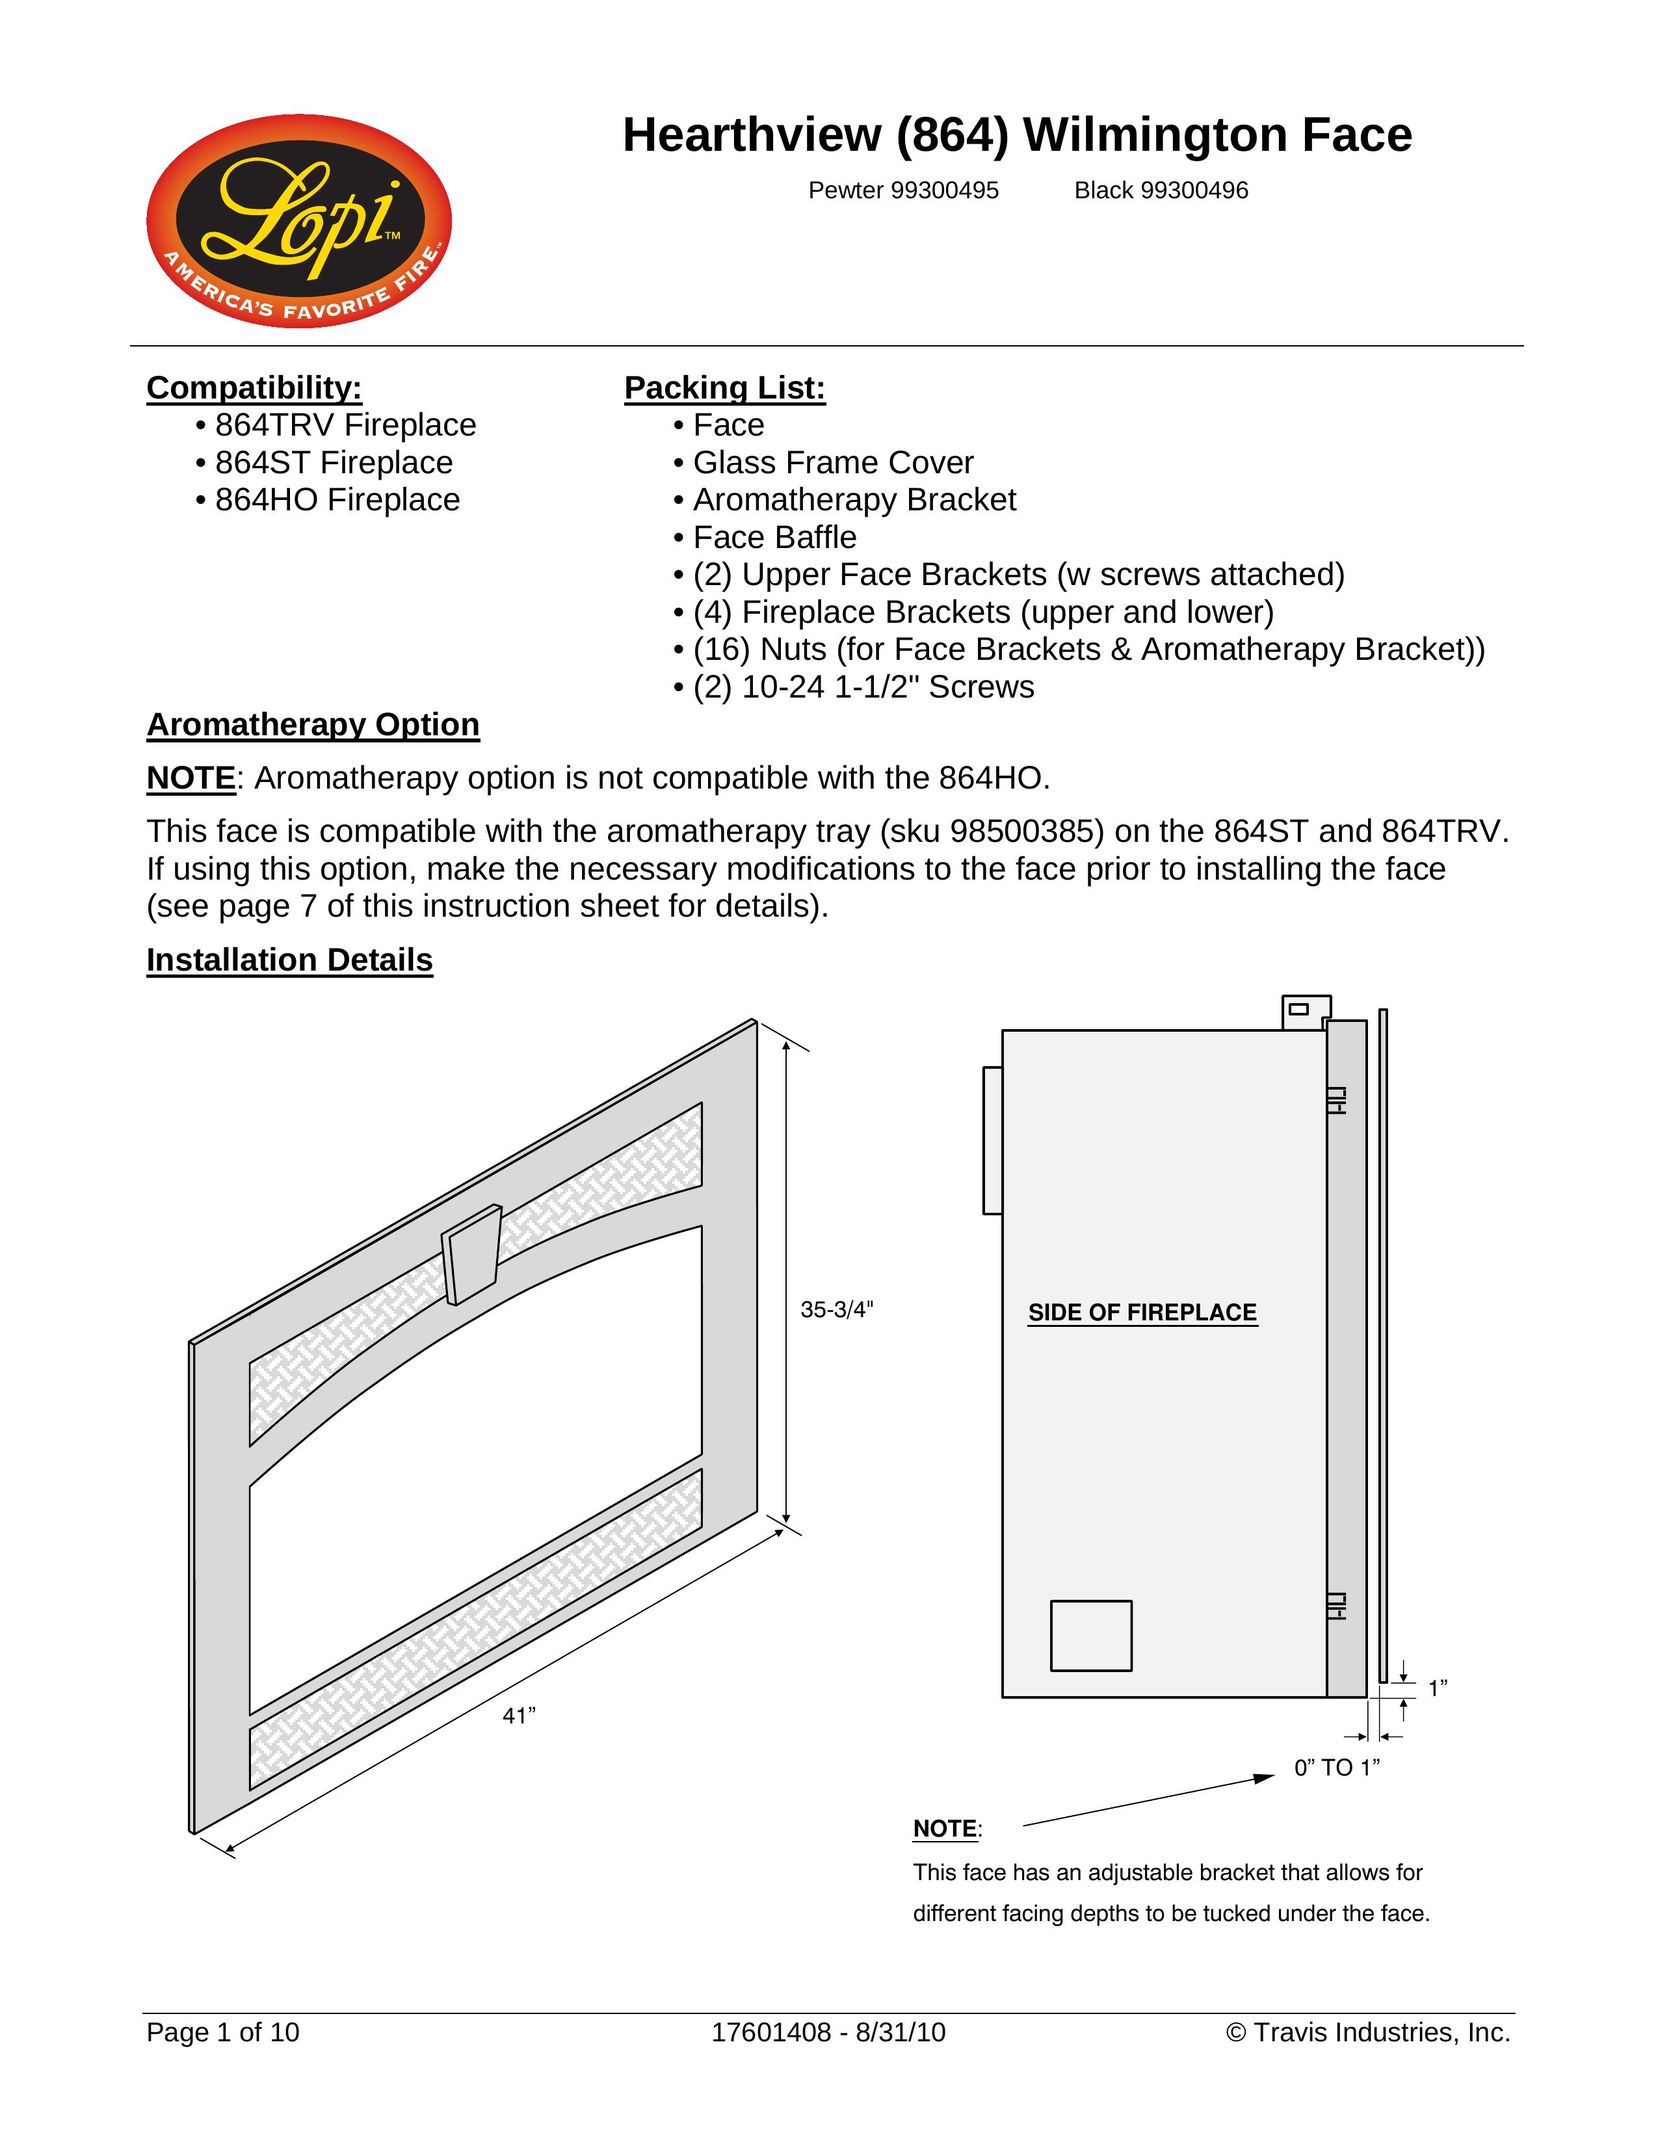 Lopi PEWTER 99300495 Indoor Fireplace User Manual